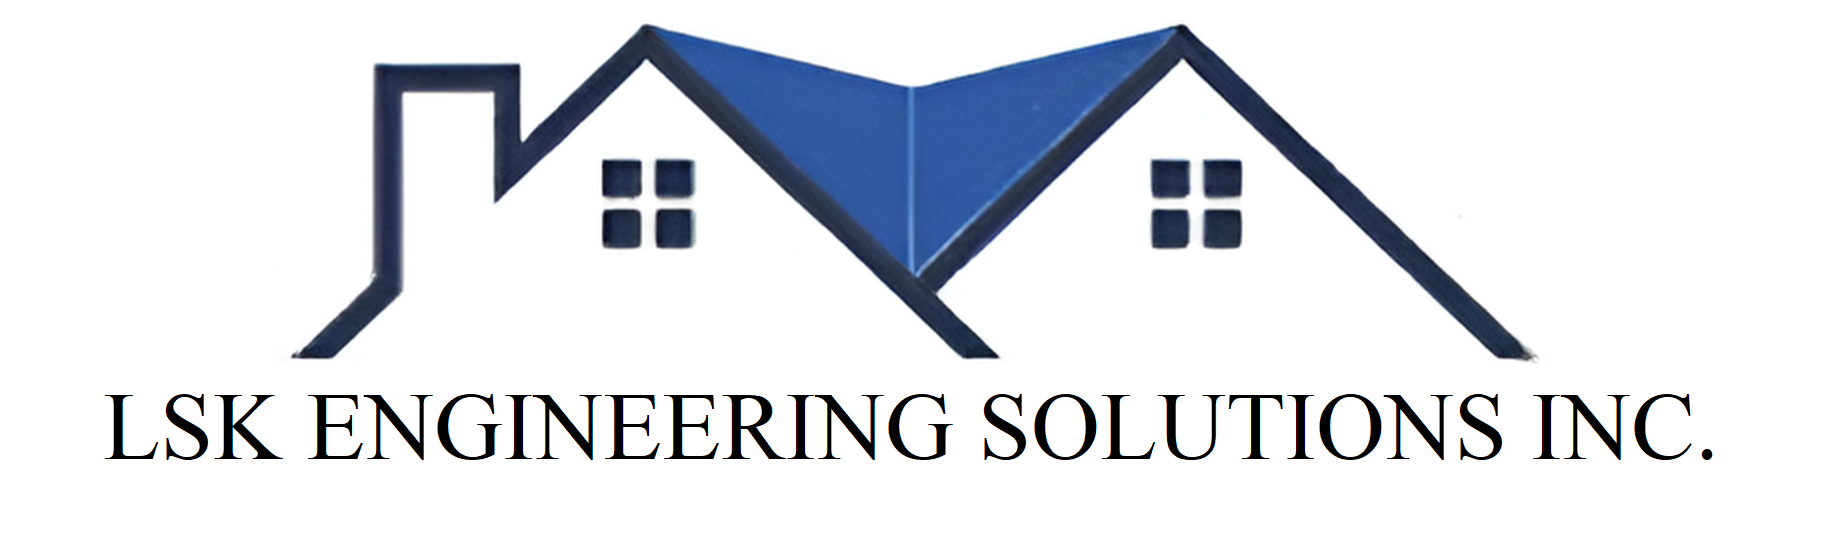 LSK Engineering Solutions, Inc Logo